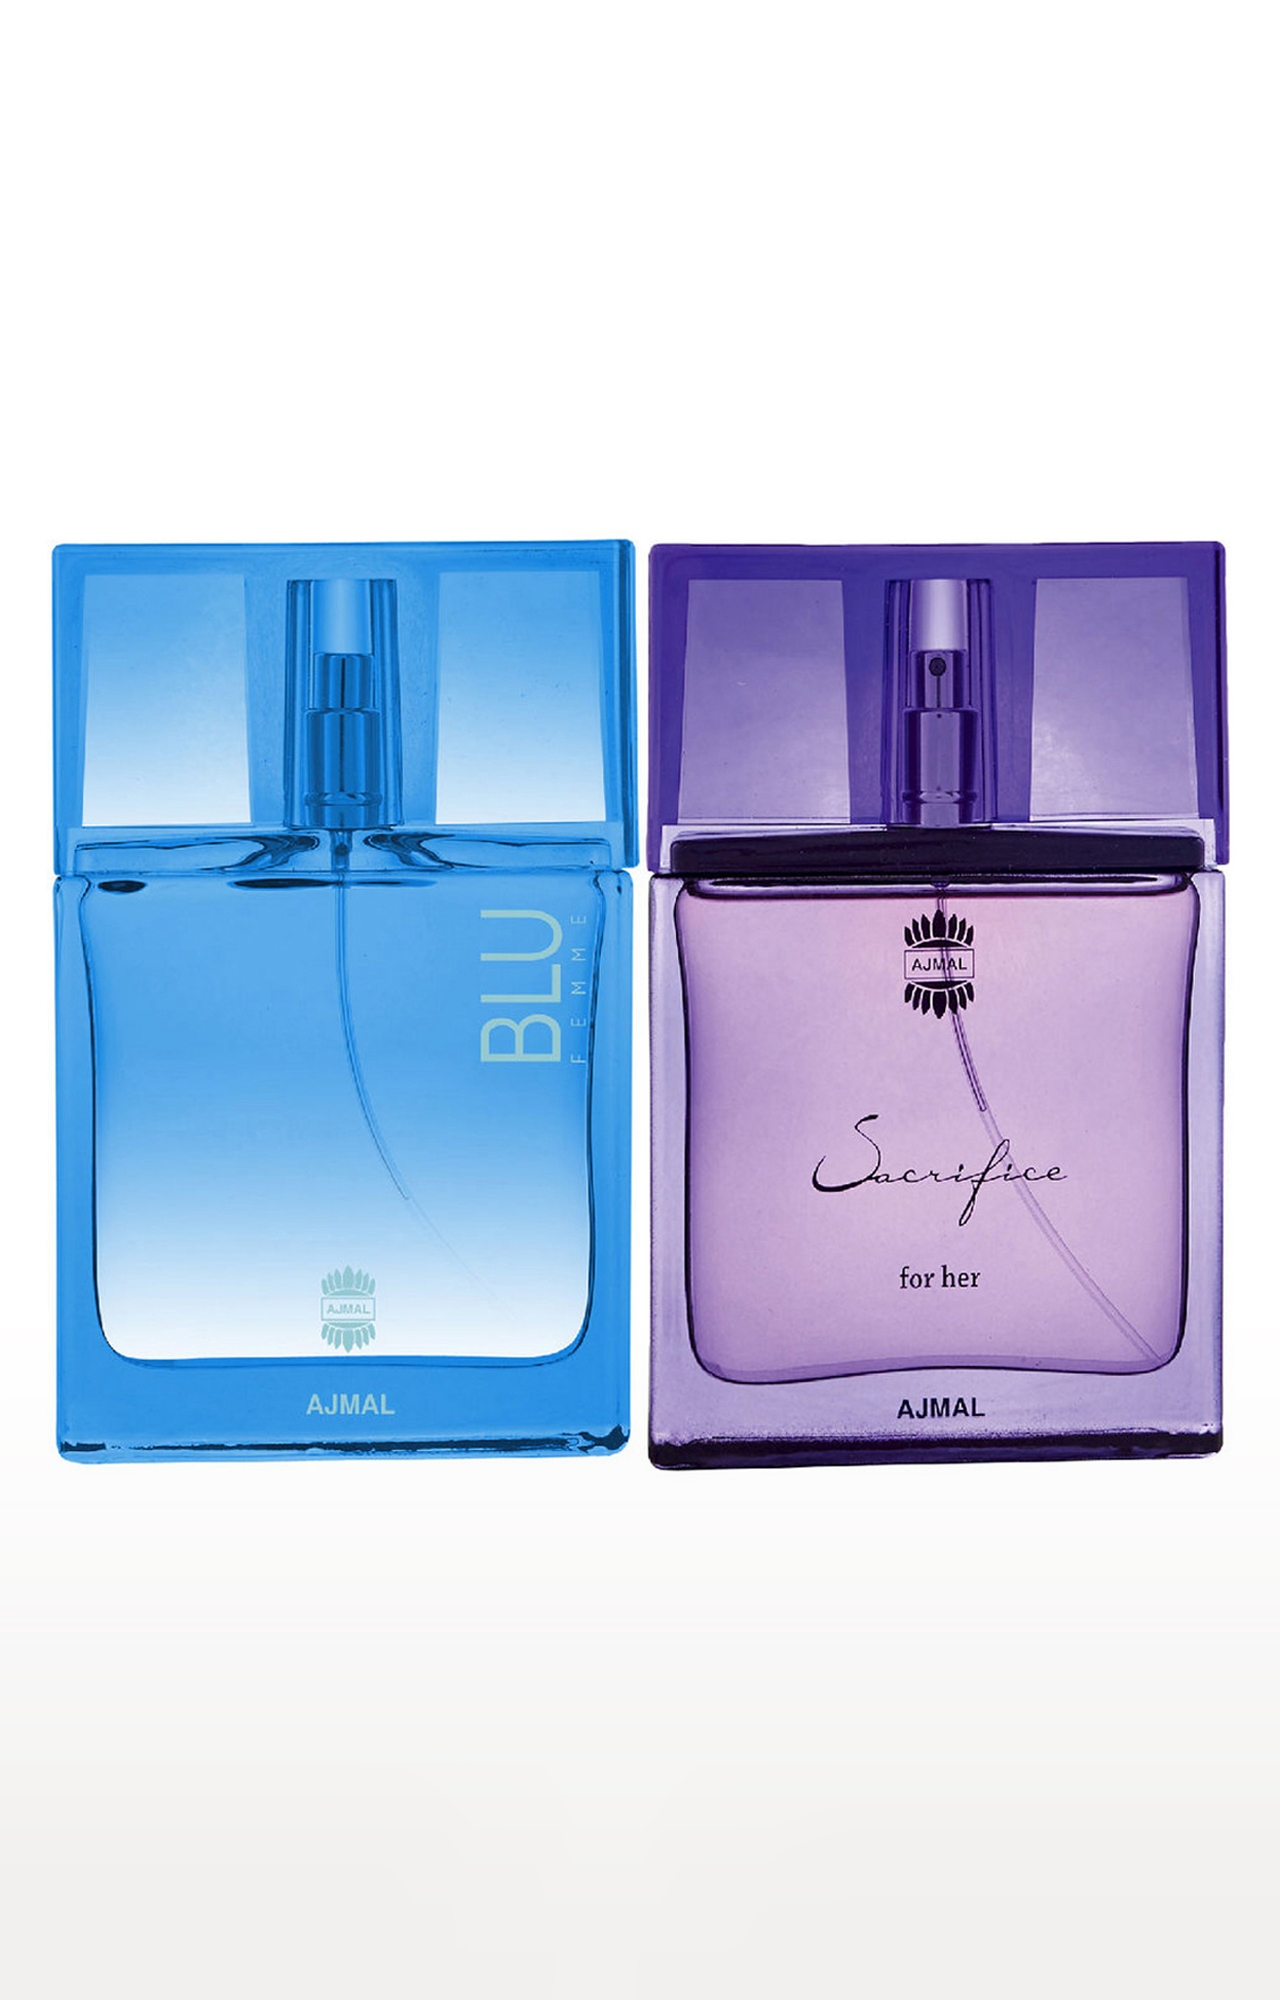 Ajmal Blu Femme EDP Perfume 50ml for Women and Sacrifice for HER EDP Musky Perfume 50ml for Women